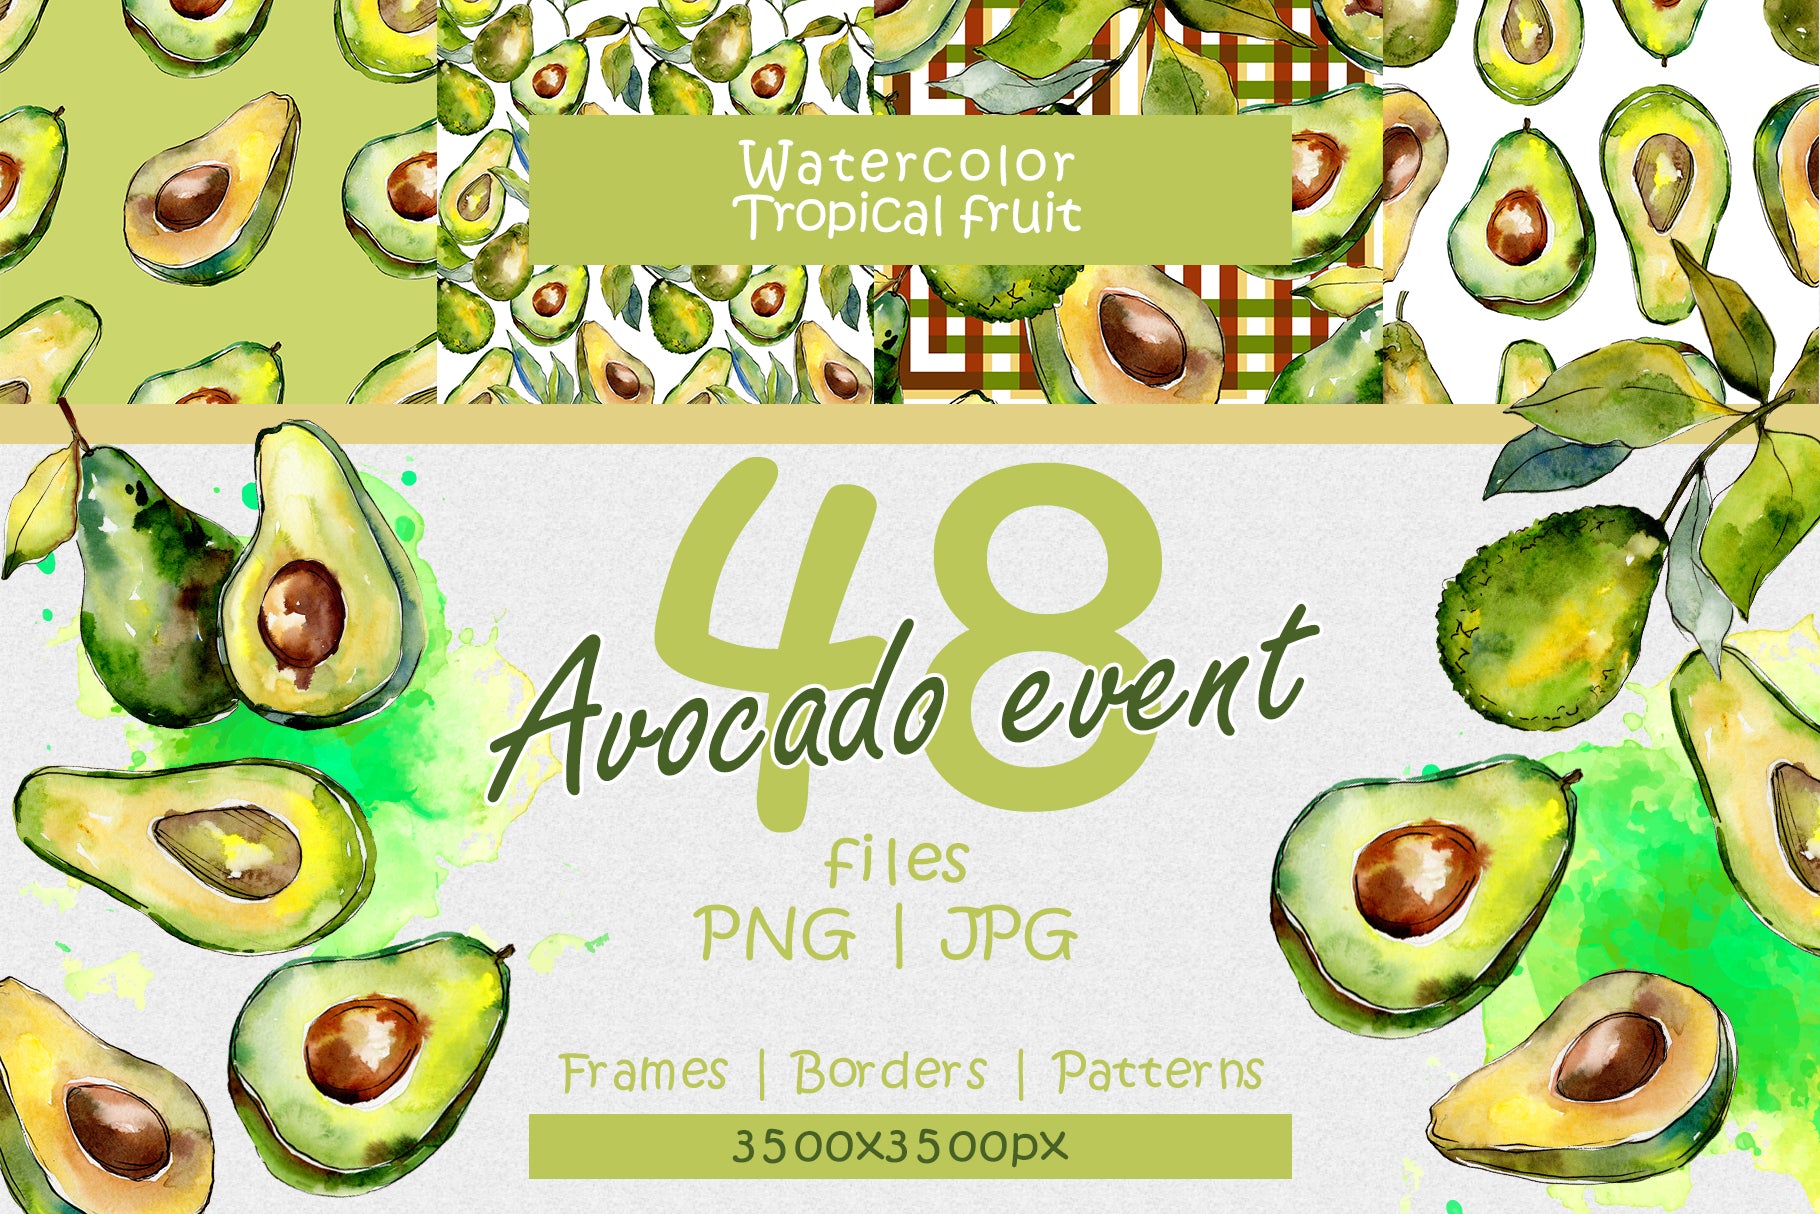 Avocado event PNG watercolor set